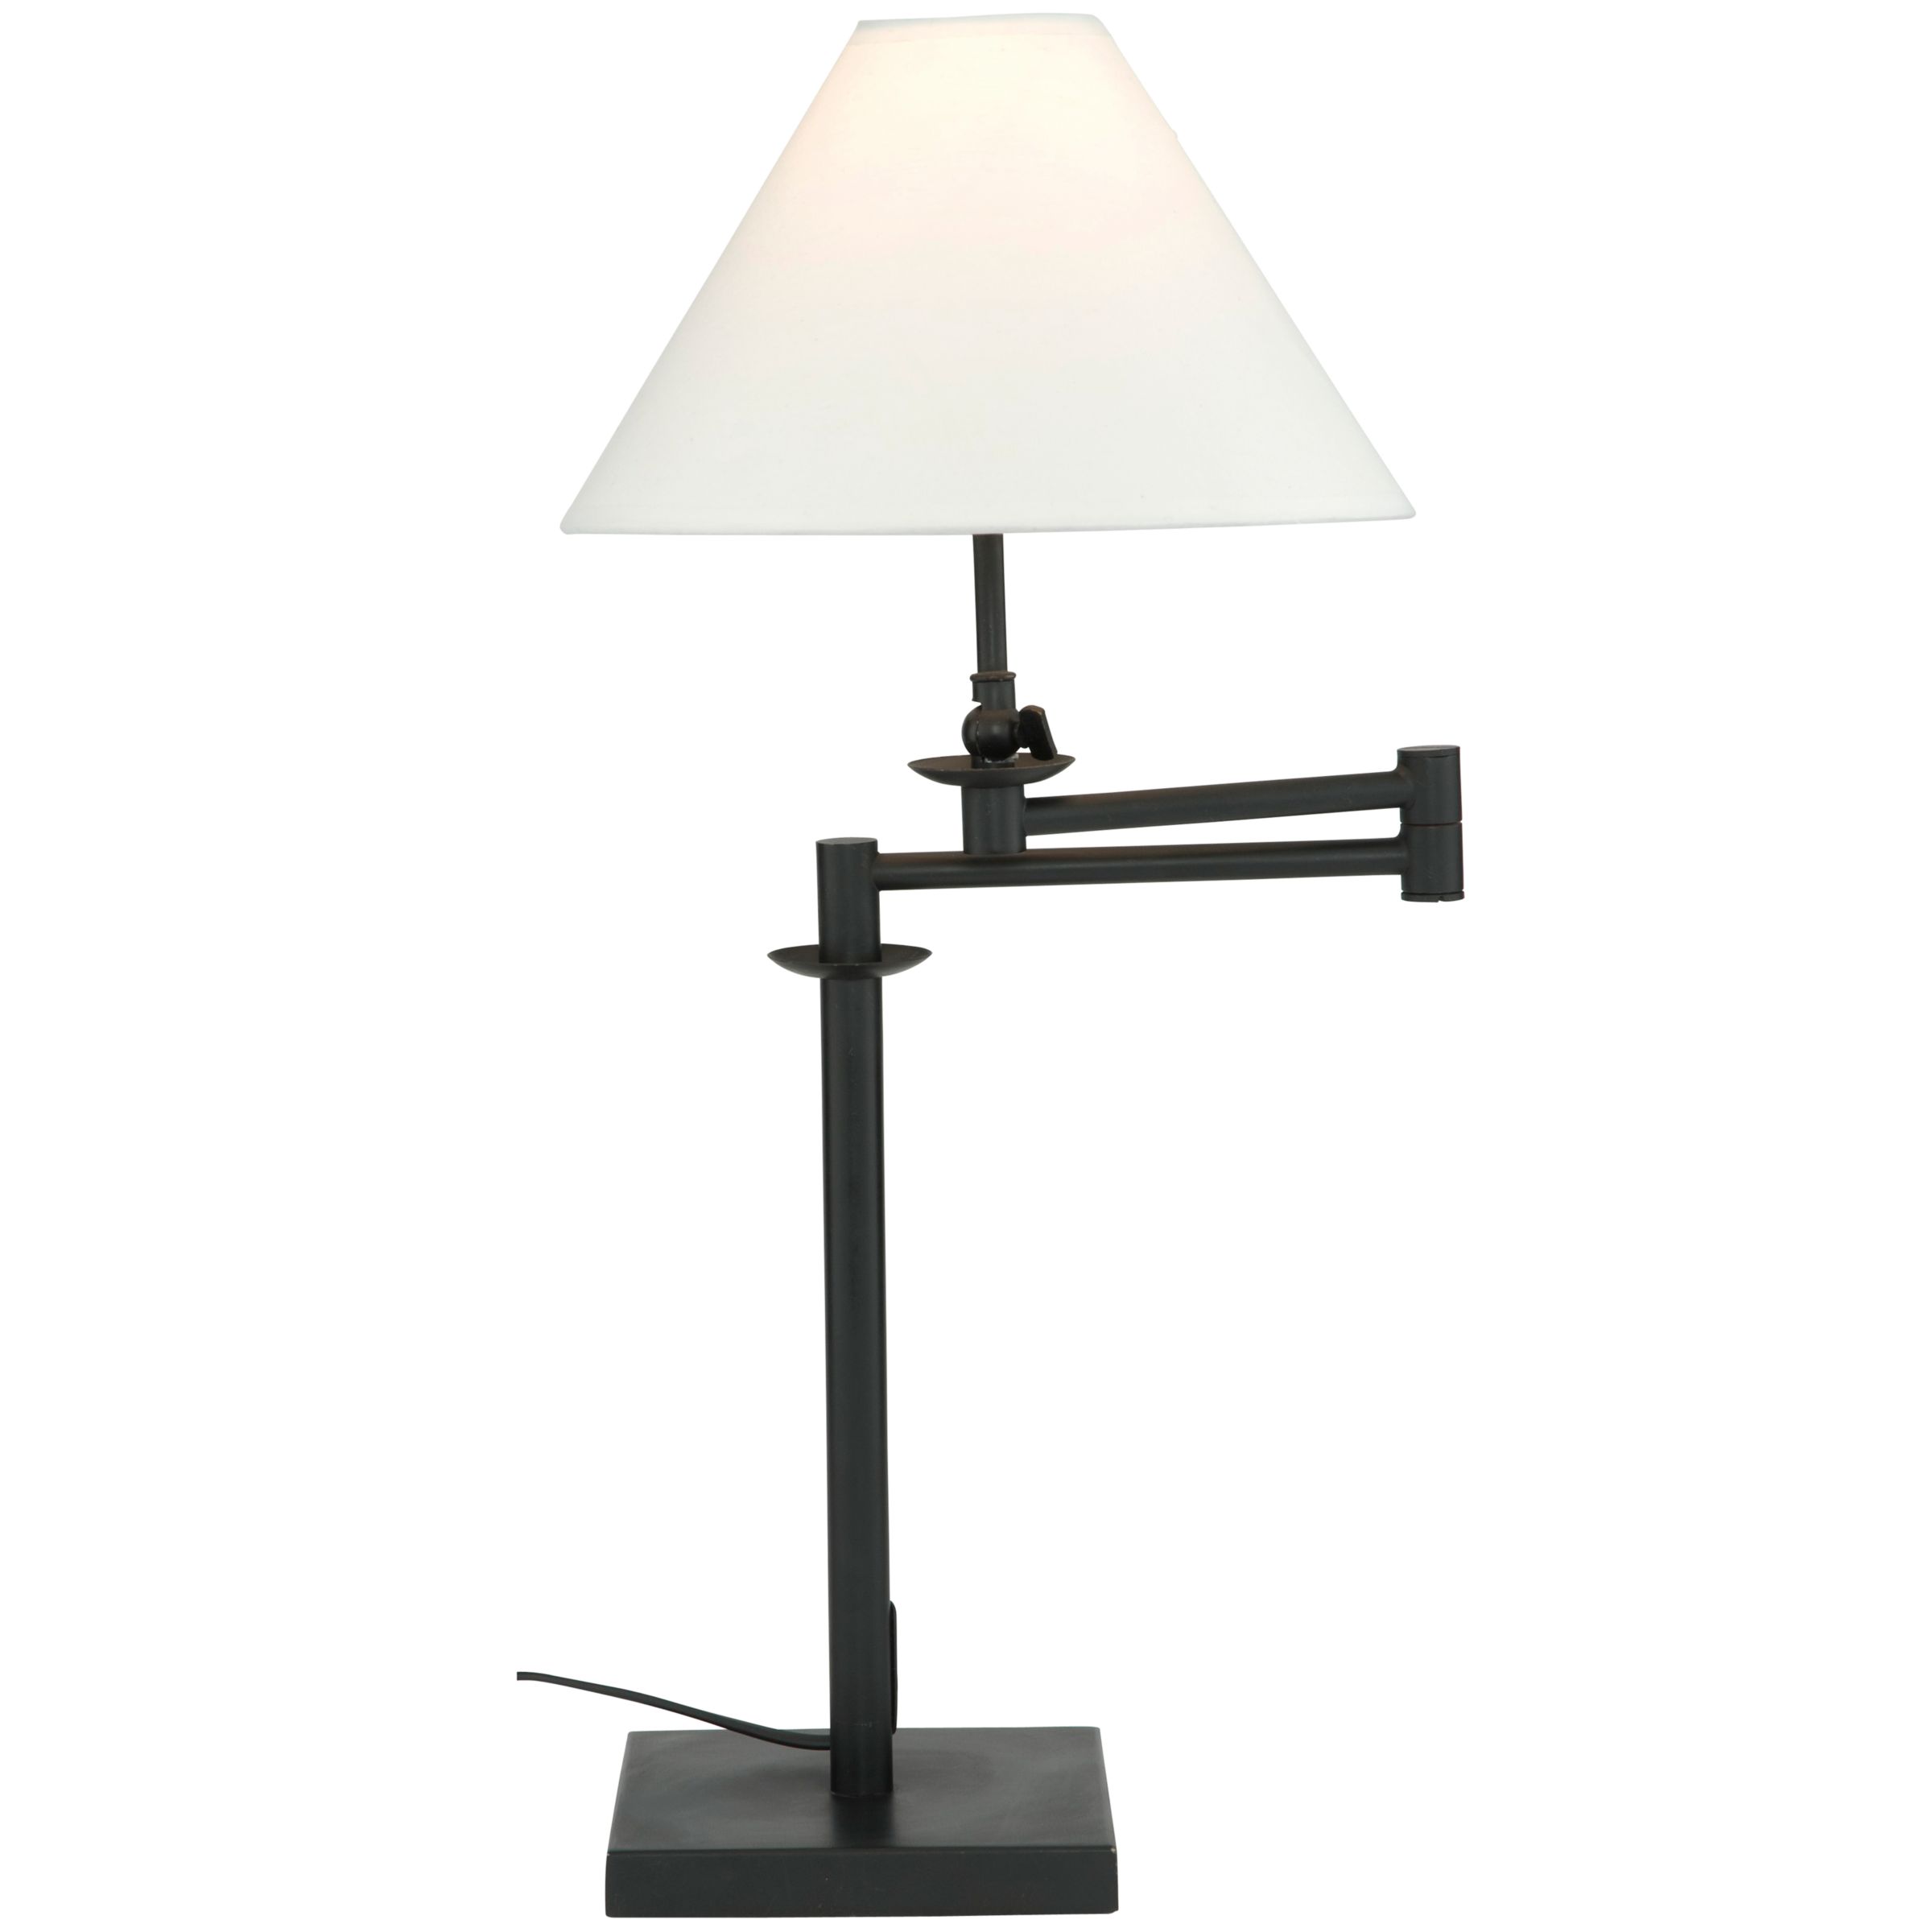 John Lewis Callie Pivot Table Lamp